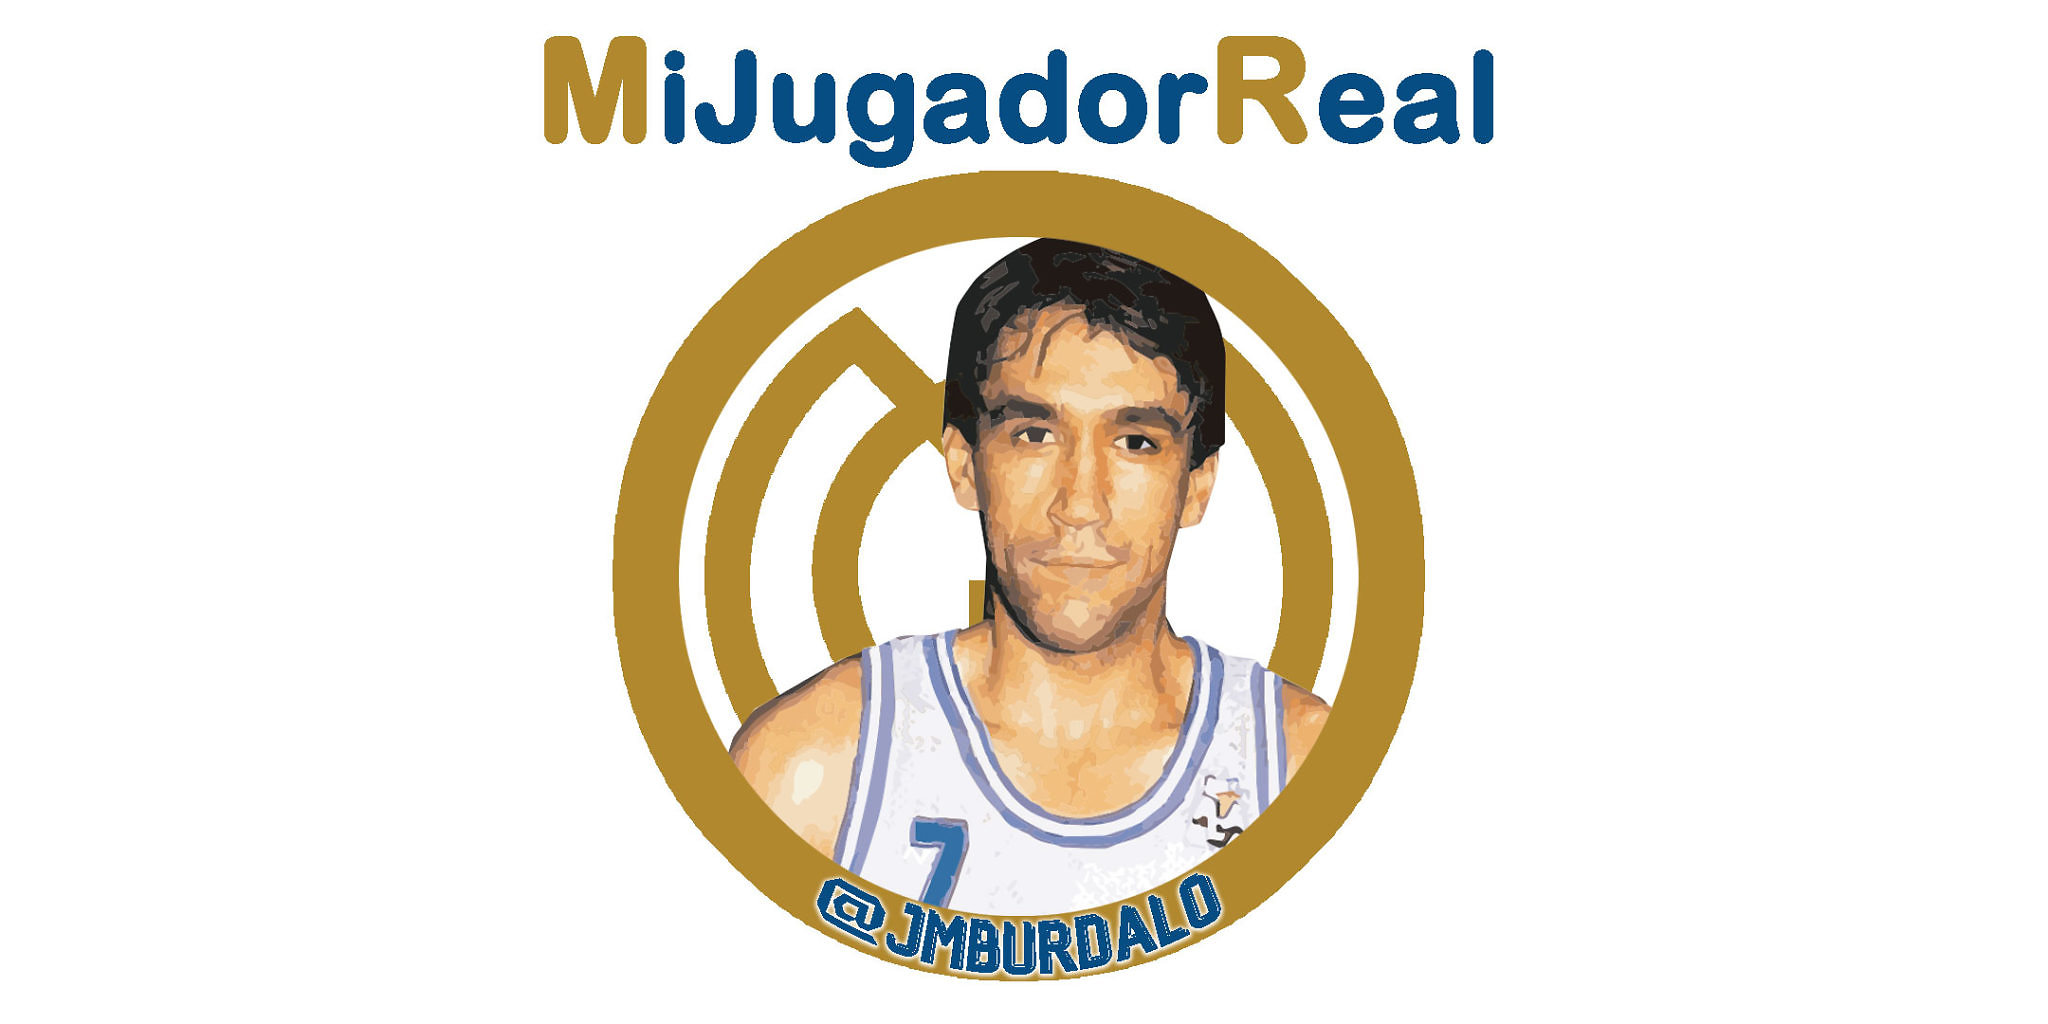 #MiJugadorReal | @jmburdalo